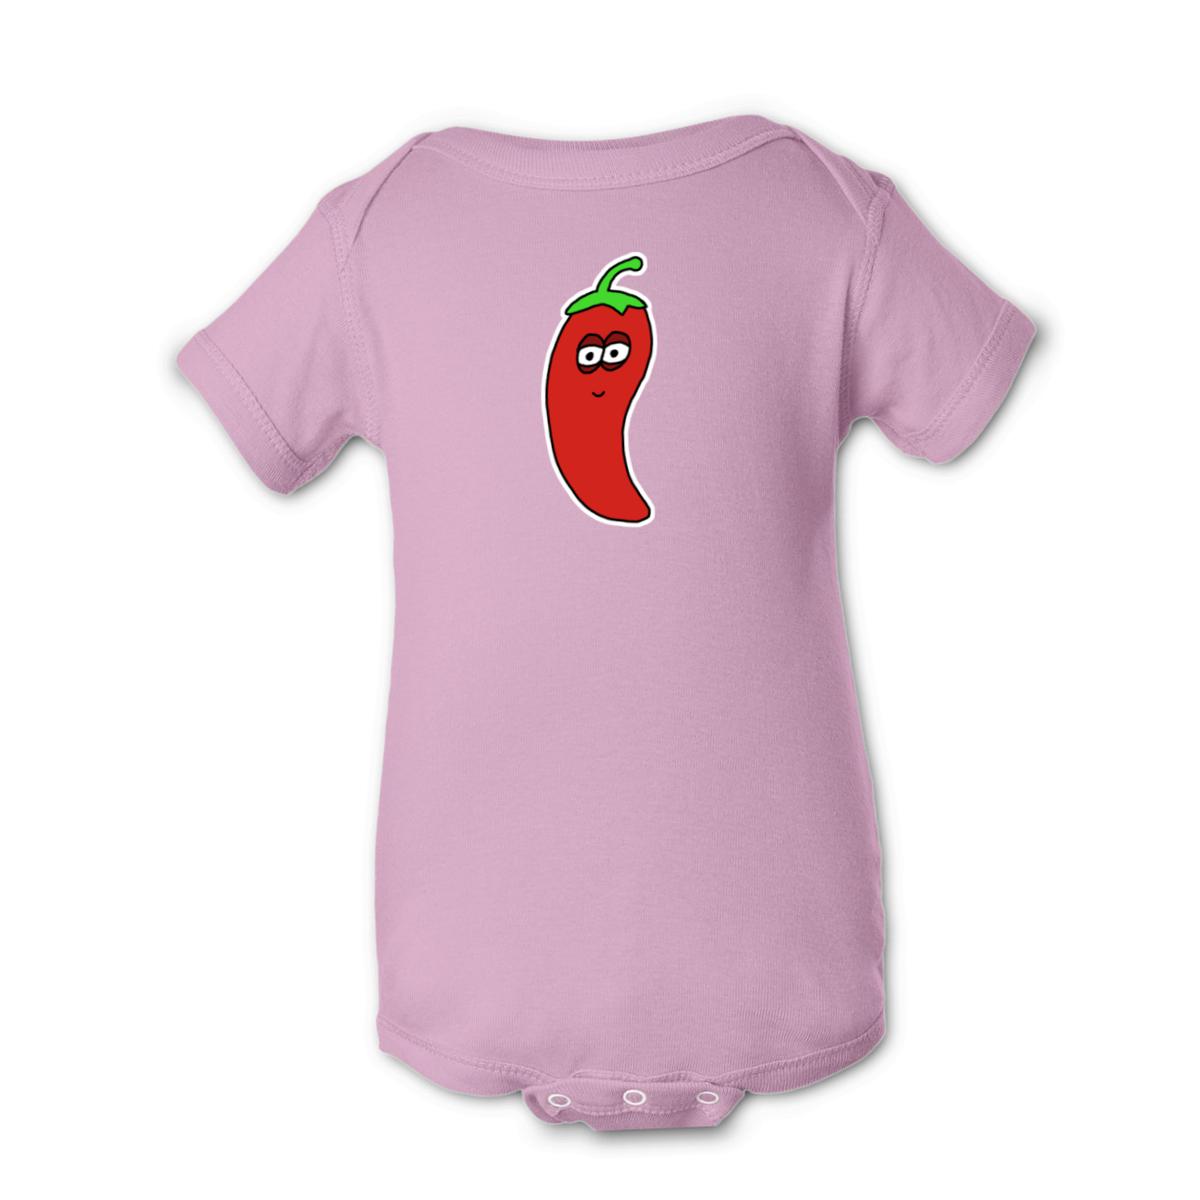 Chili Pepper Onesie 18M pink